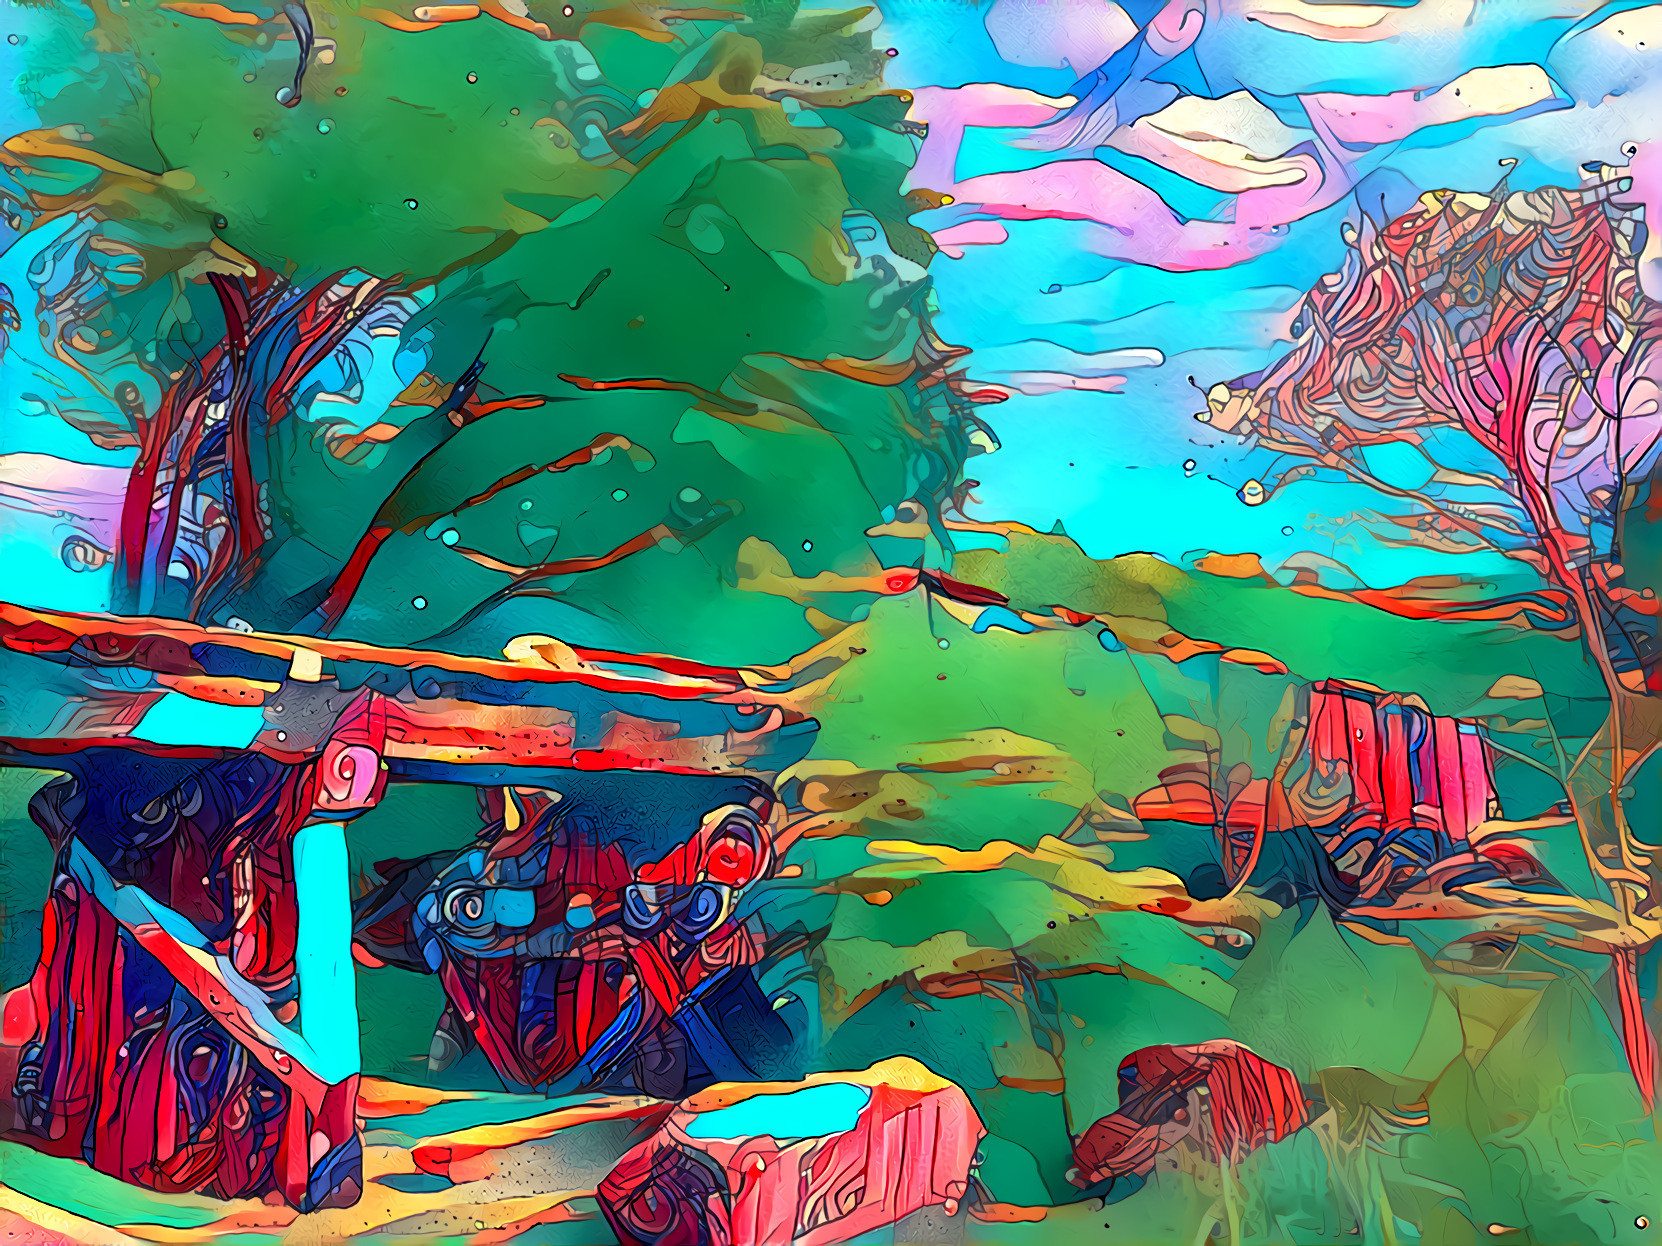 Cartoon-wisp bridge and tree